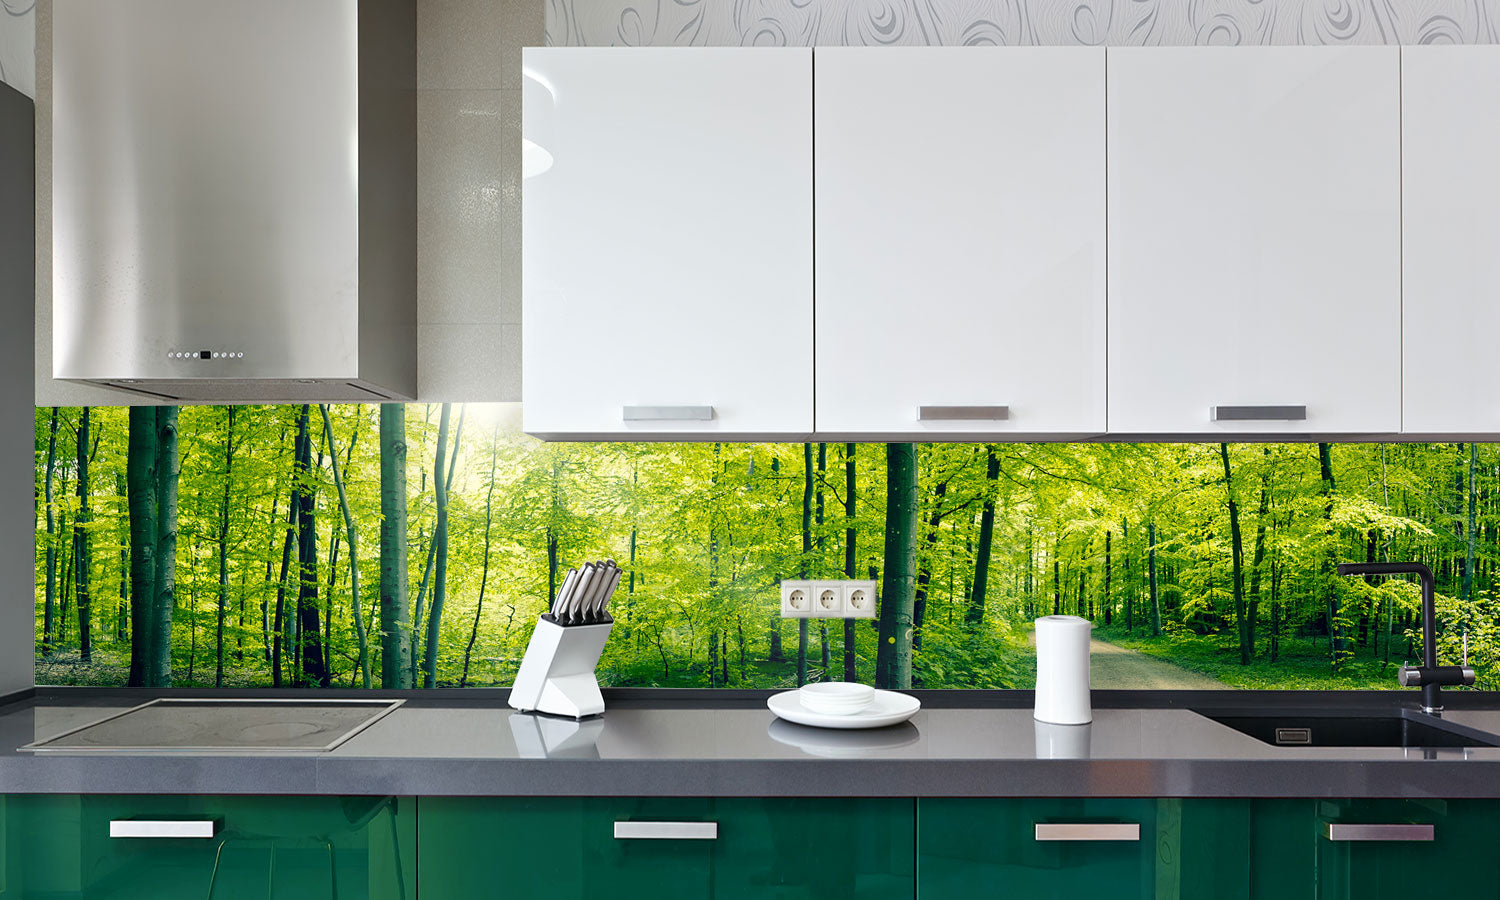 Paneli za kuhinje Green forest -  Stakleni / PVC ploče / Pleksiglas -  sa printom za kuhinju, Zidne obloge PKU205